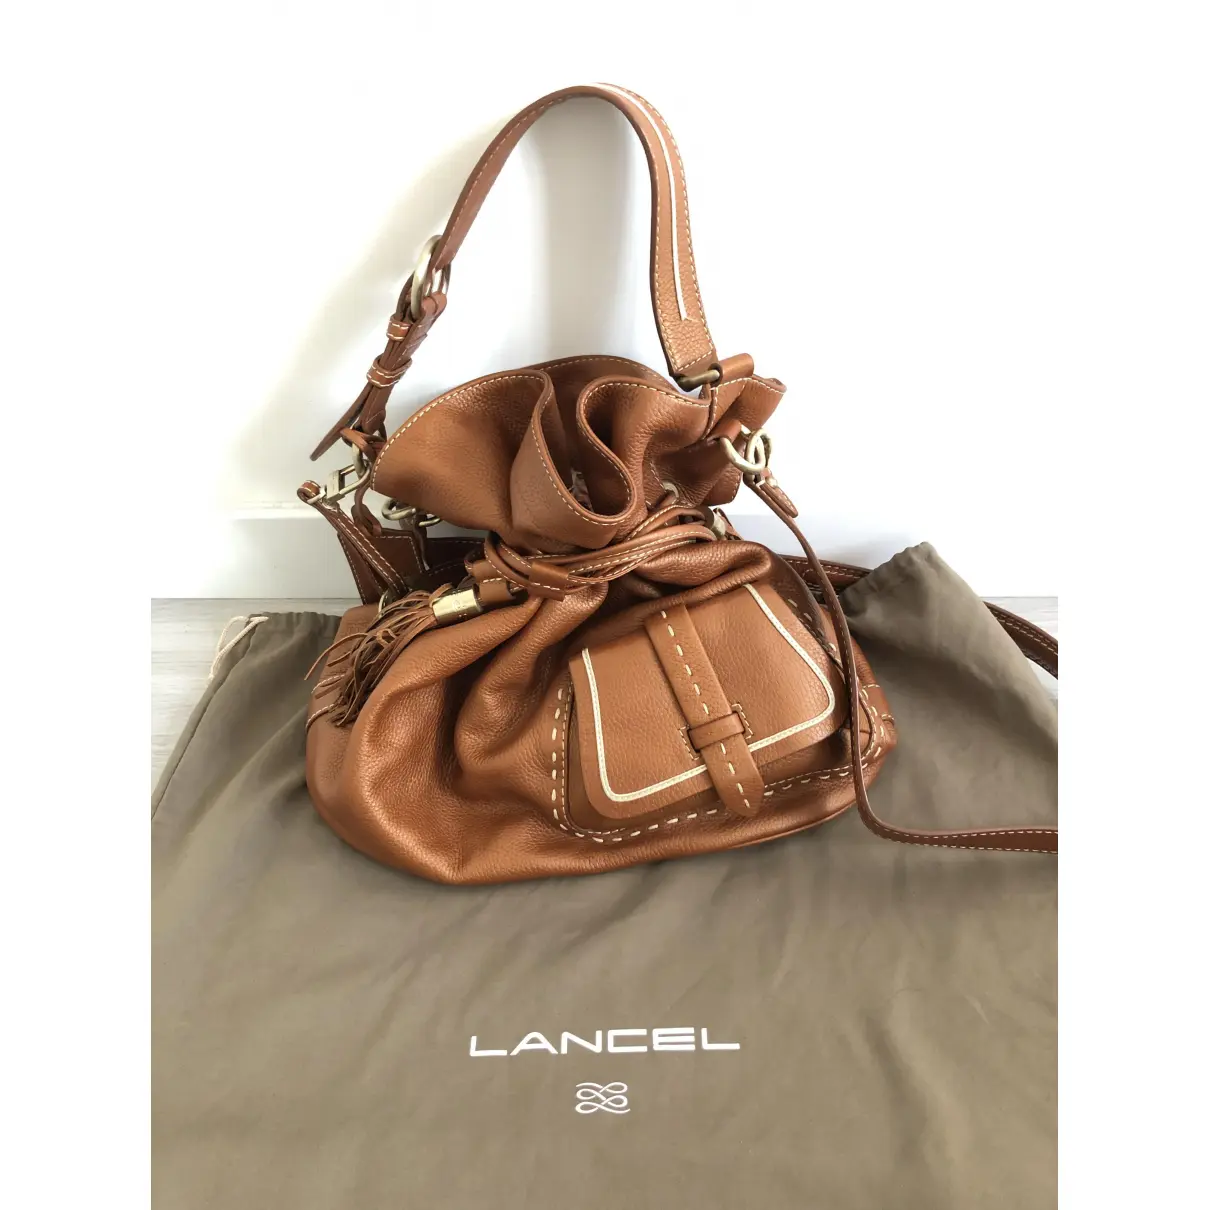 1er Flirt exotic leathers handbag Lancel